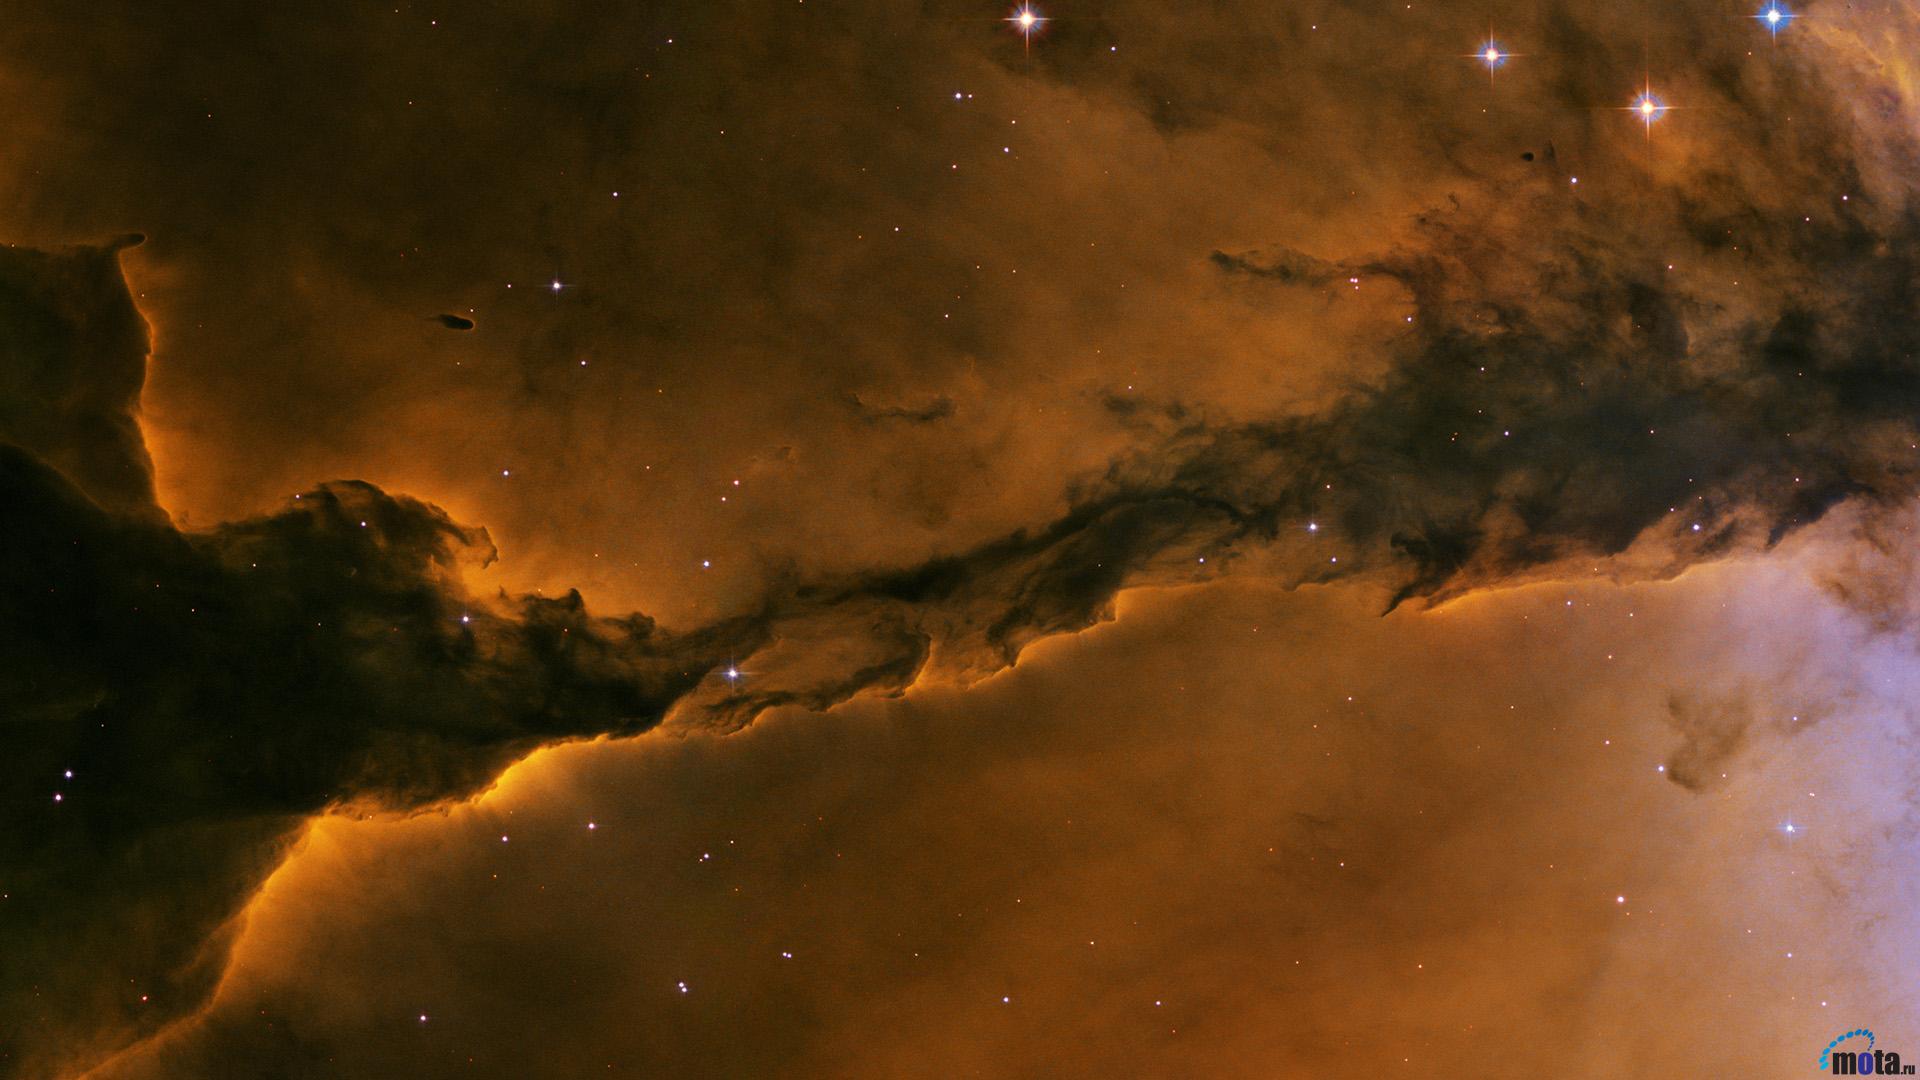 Eagle Nebula Wallpaper HD In Space Imageci